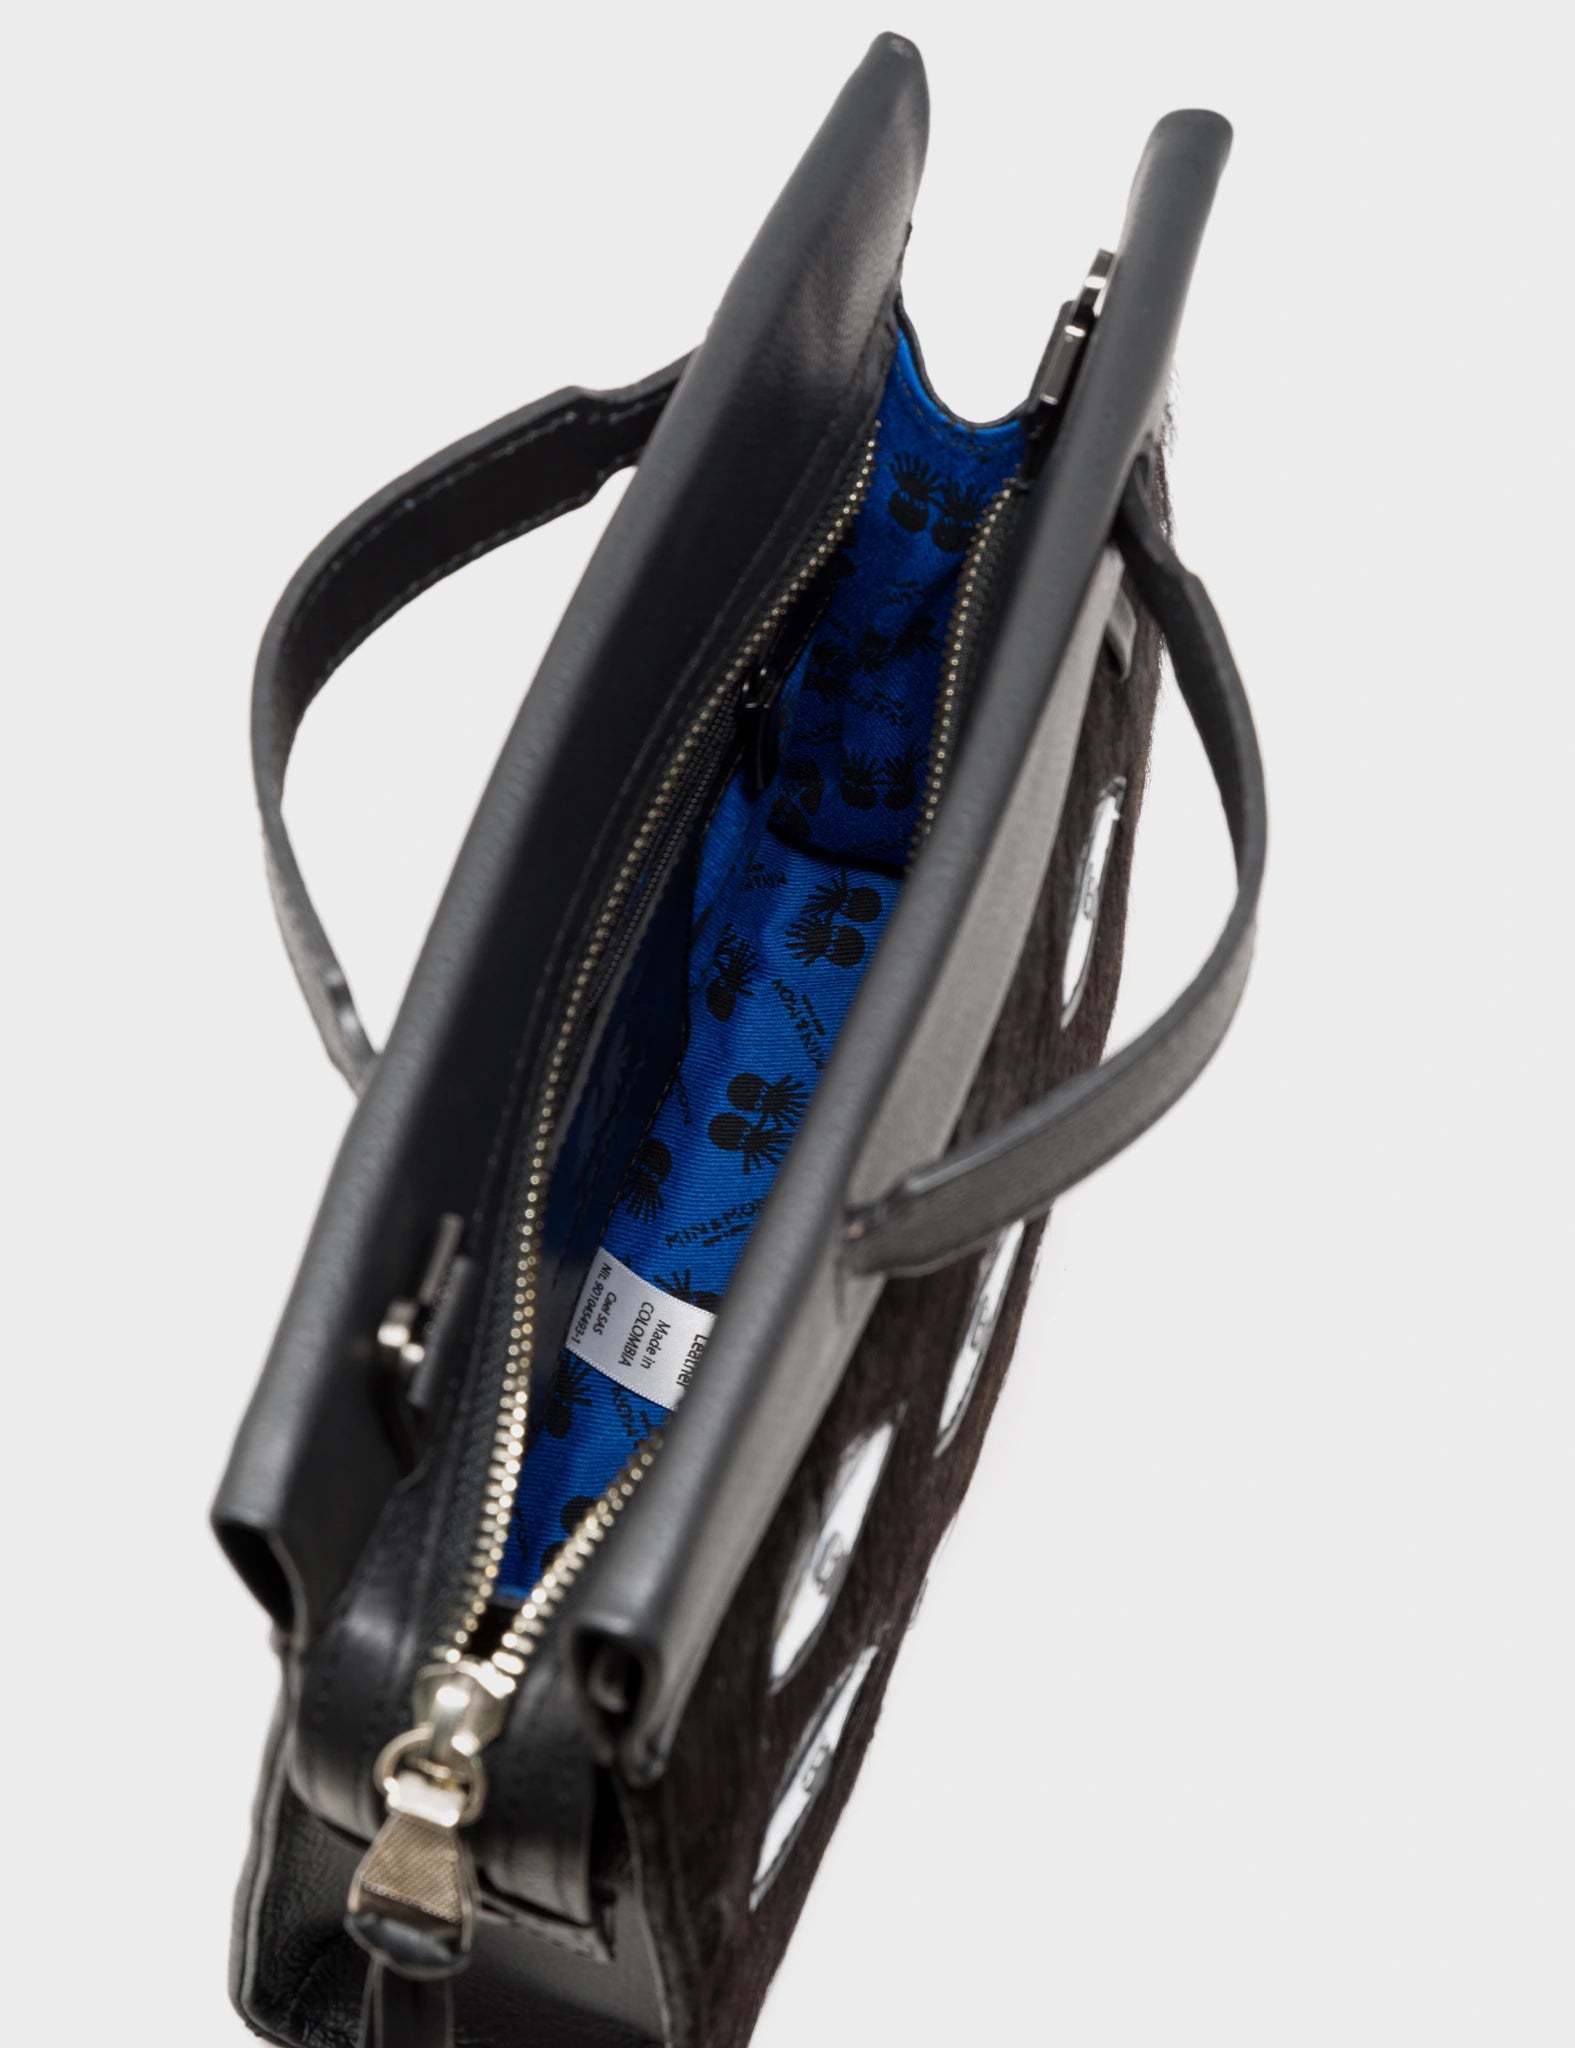 Vali Crossbody Small Black Leather Bag - Eyes Applique Adjustable Handle - Inside view